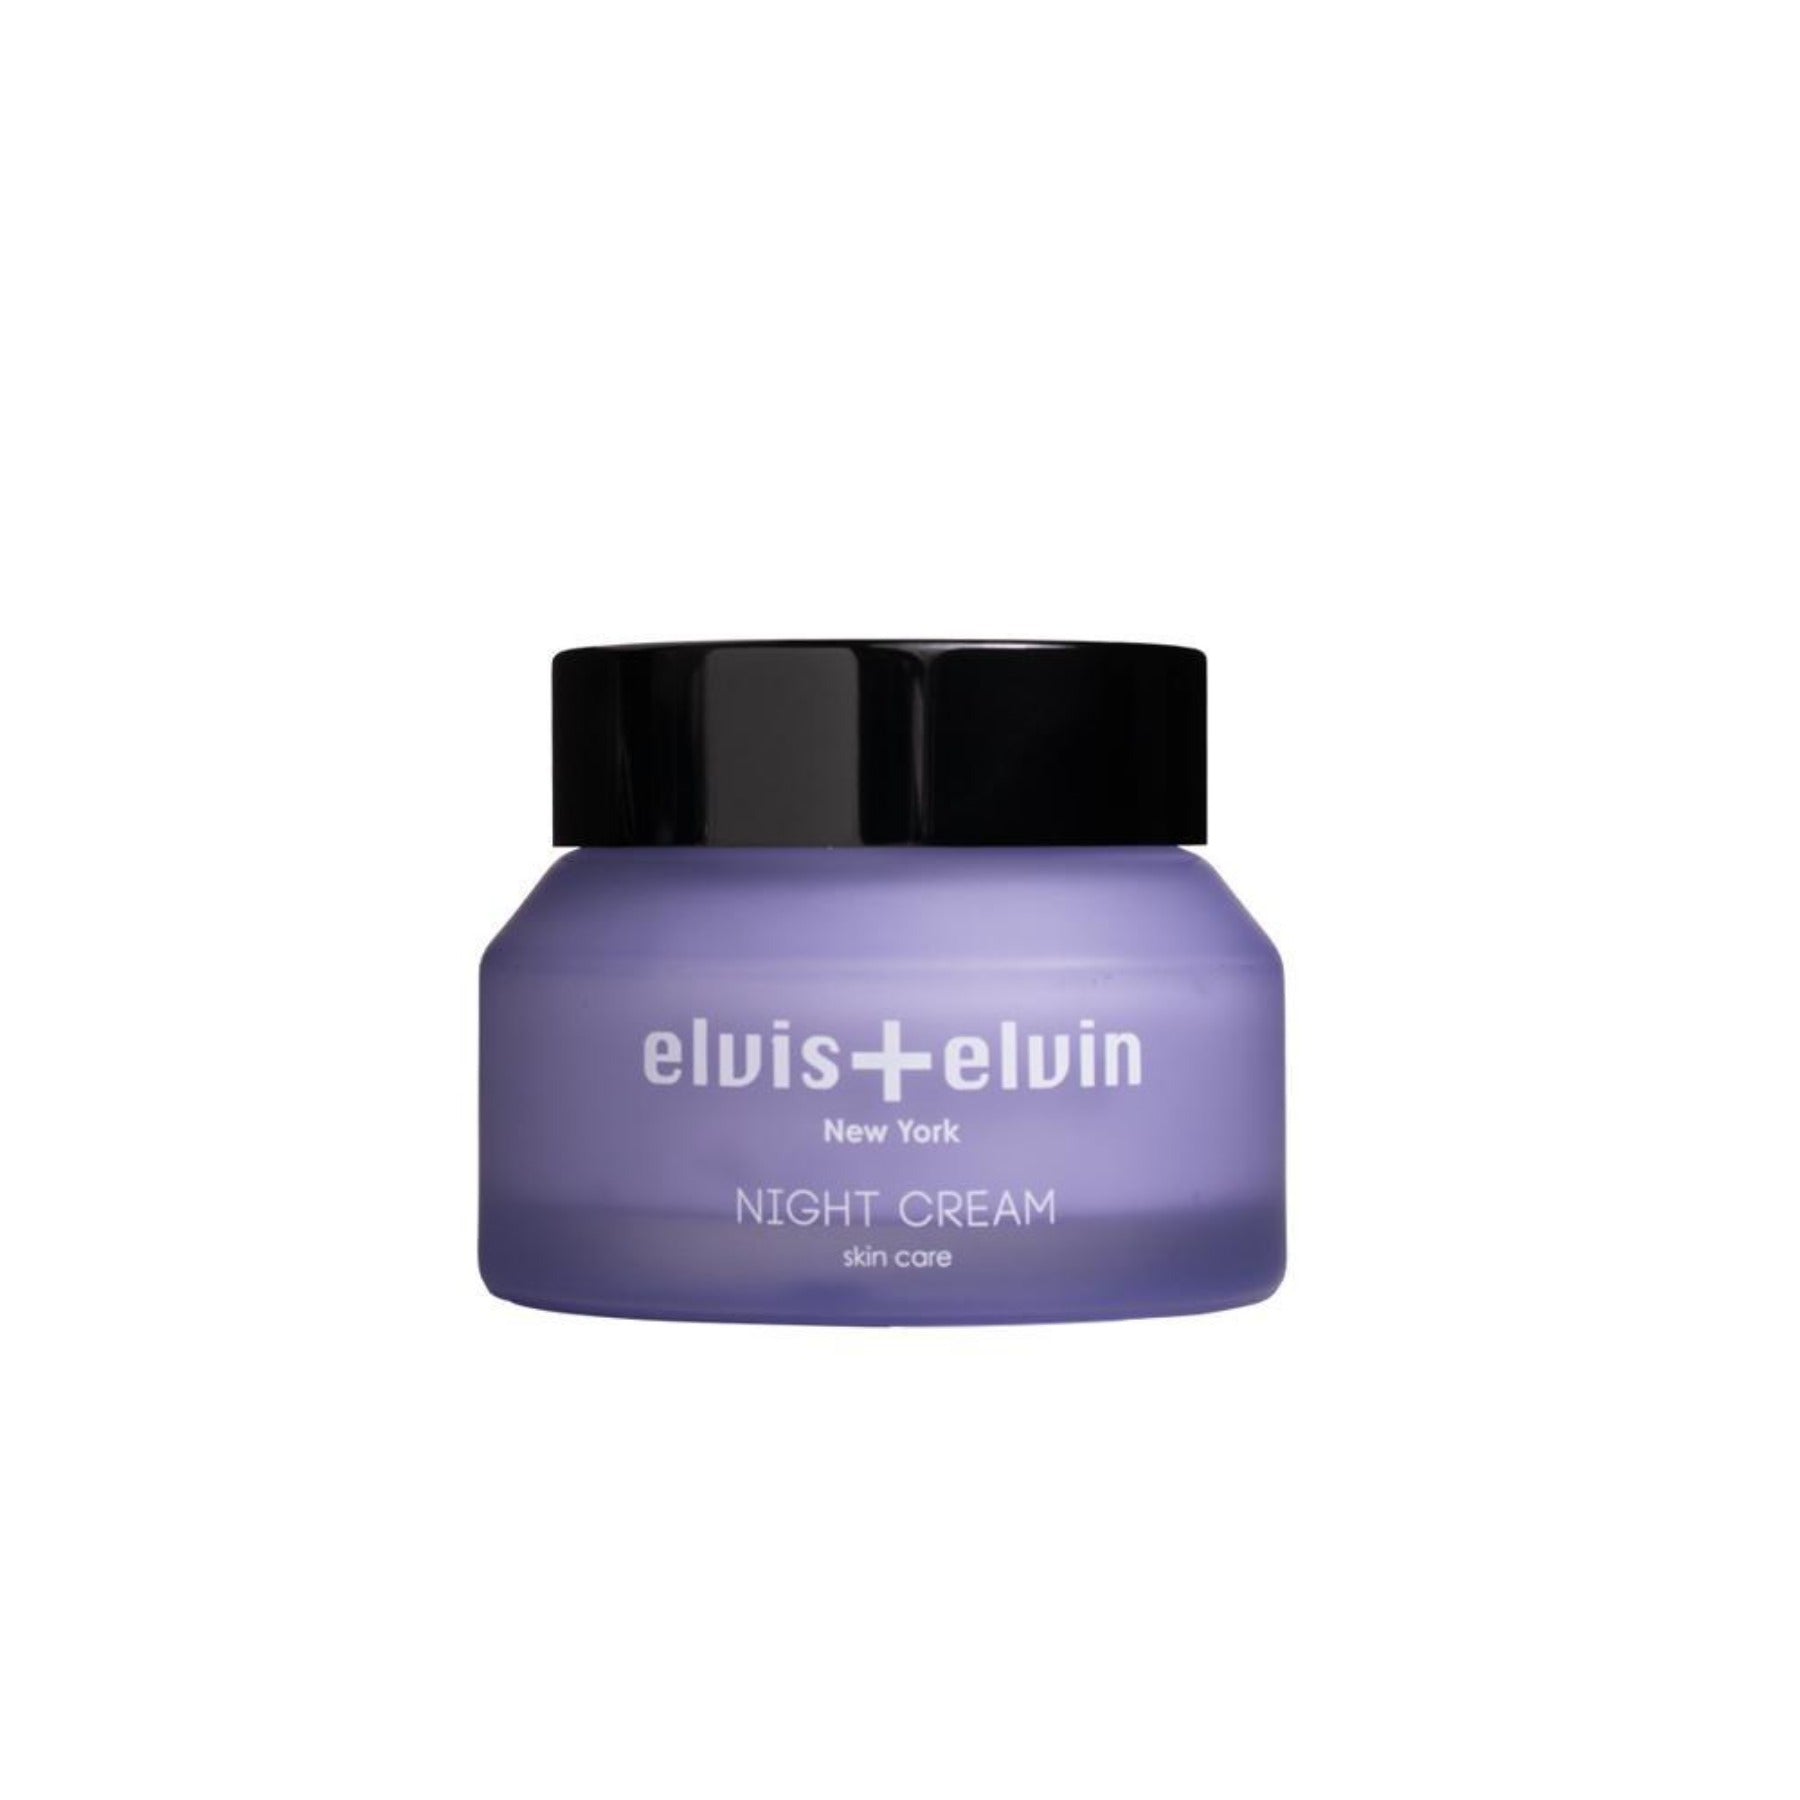 Lilac Night Cream by elvis+elvin